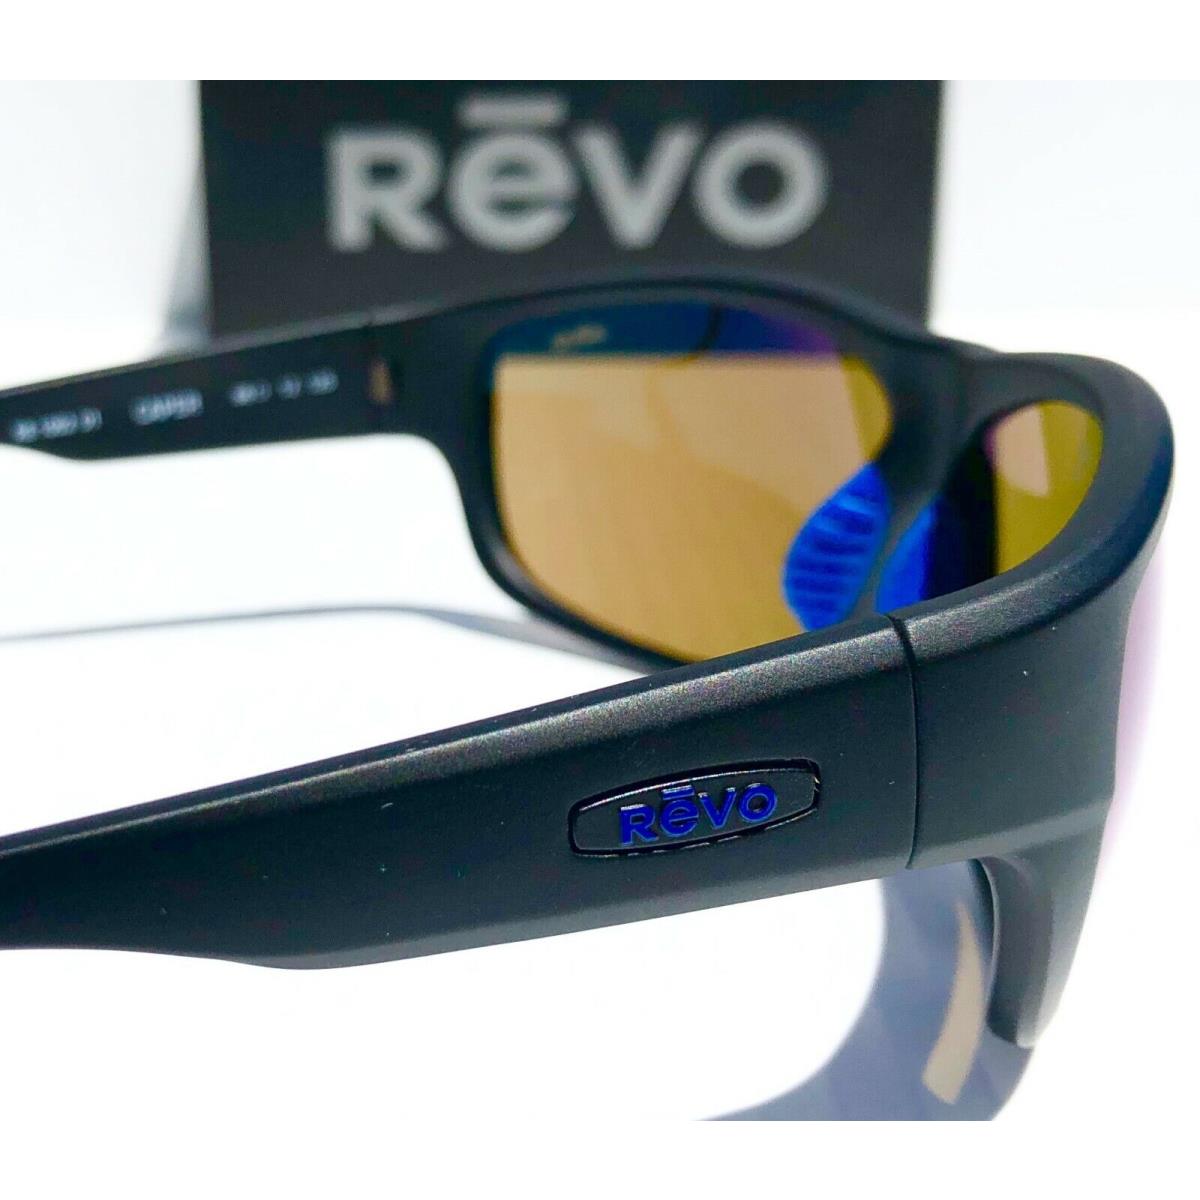 Revo sunglasses Bear Grylls Caper - Matte Black Frame, Shallow Green Water Polarized Lens